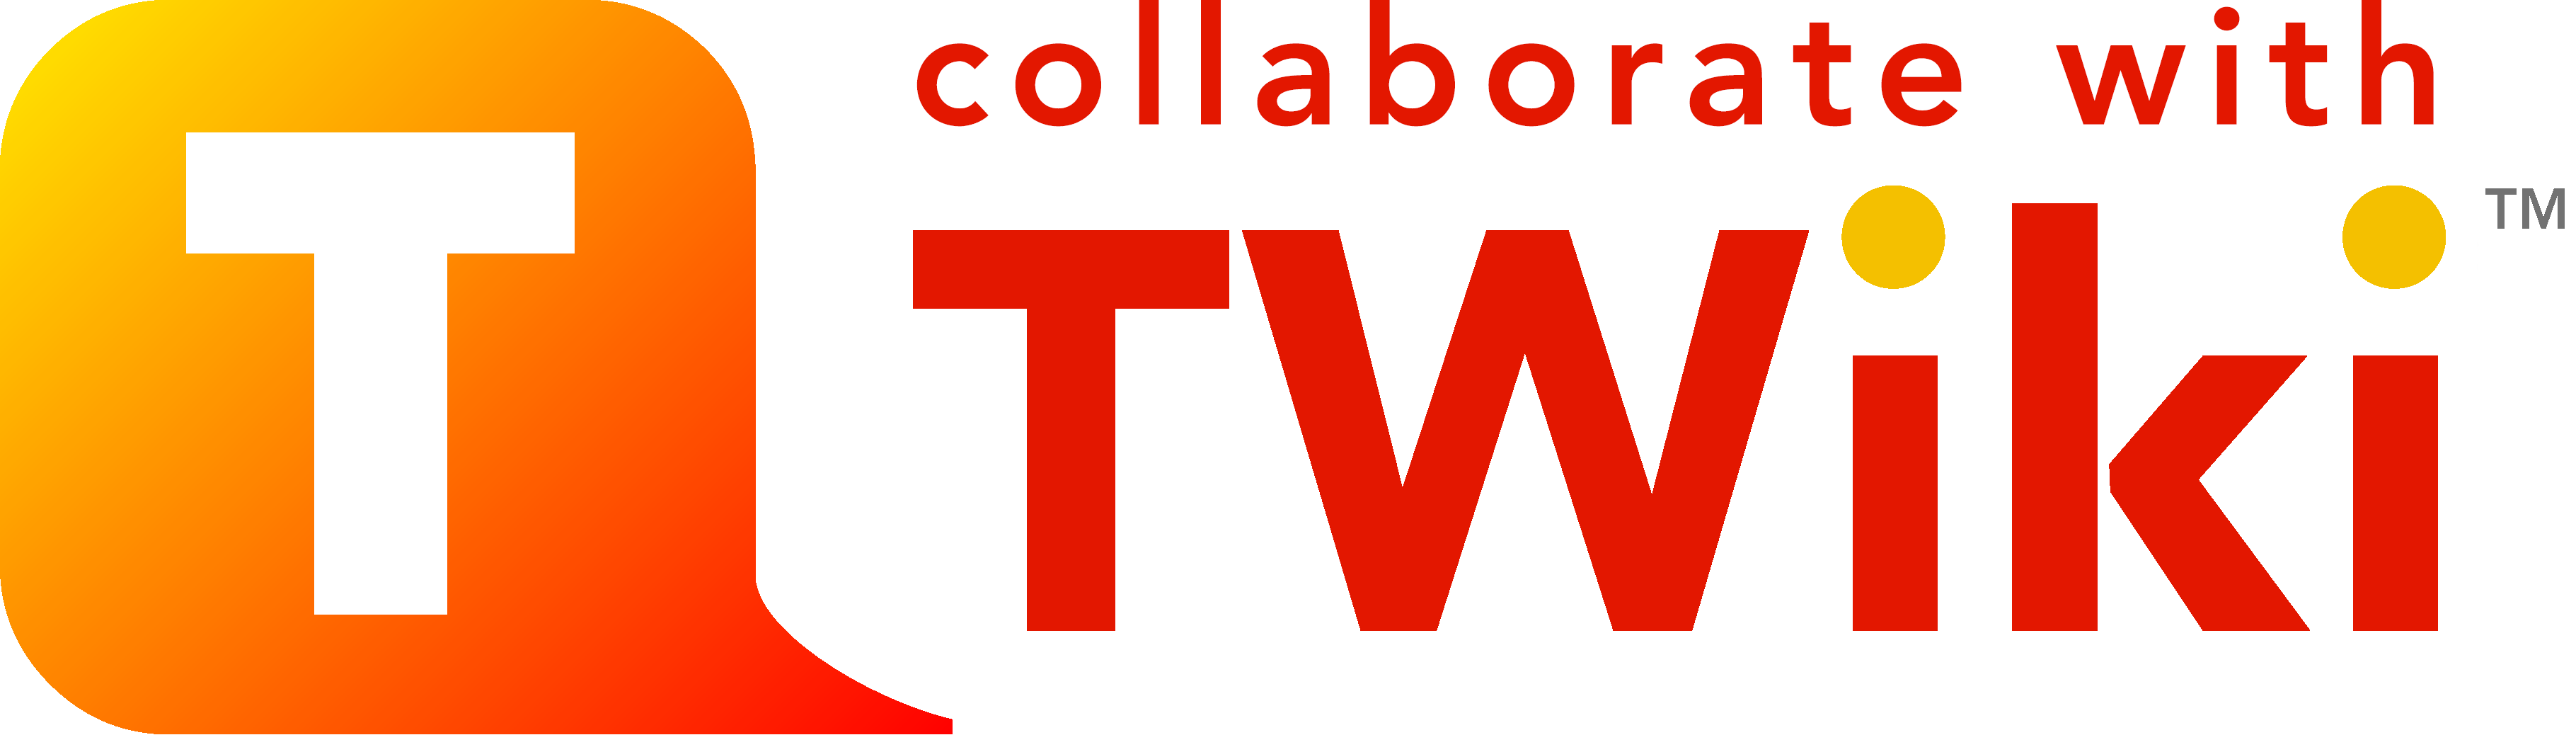 TWiki logo image